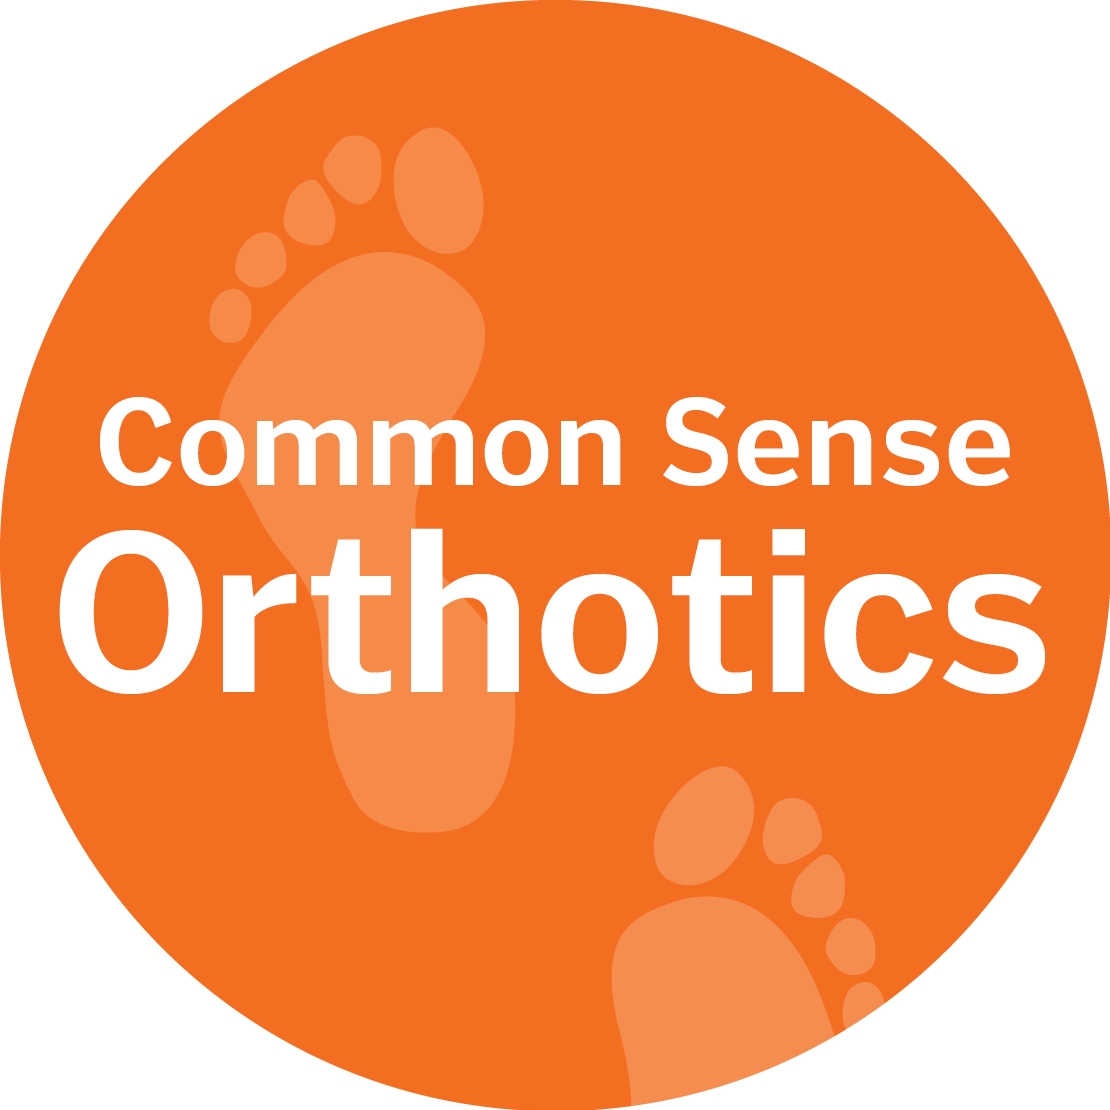 Common Sense Orthotics